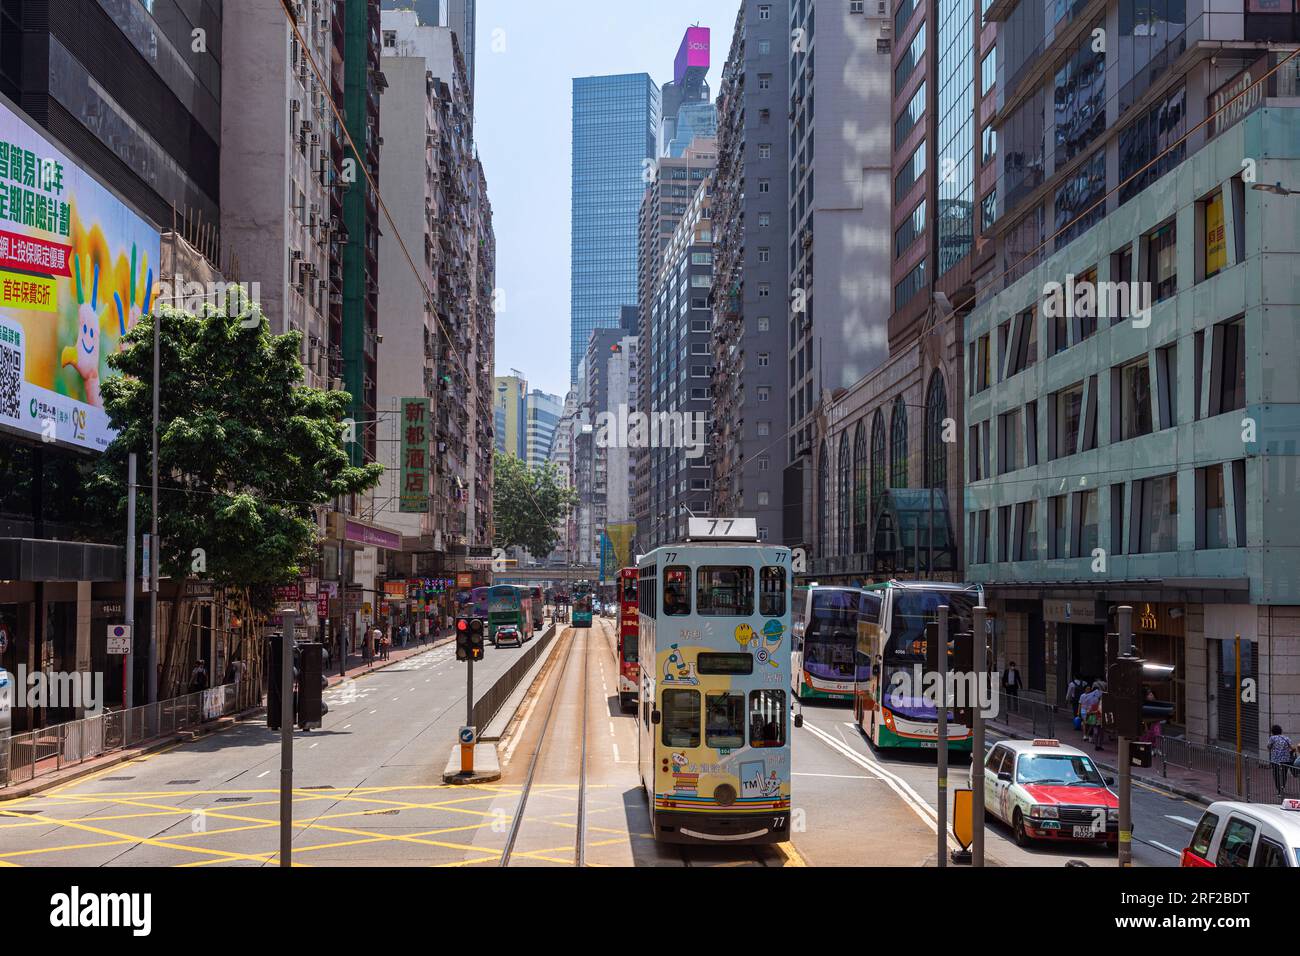 Street scene with buildings and people, Wanchai, Hong Kong, SAR, China Stock Photo